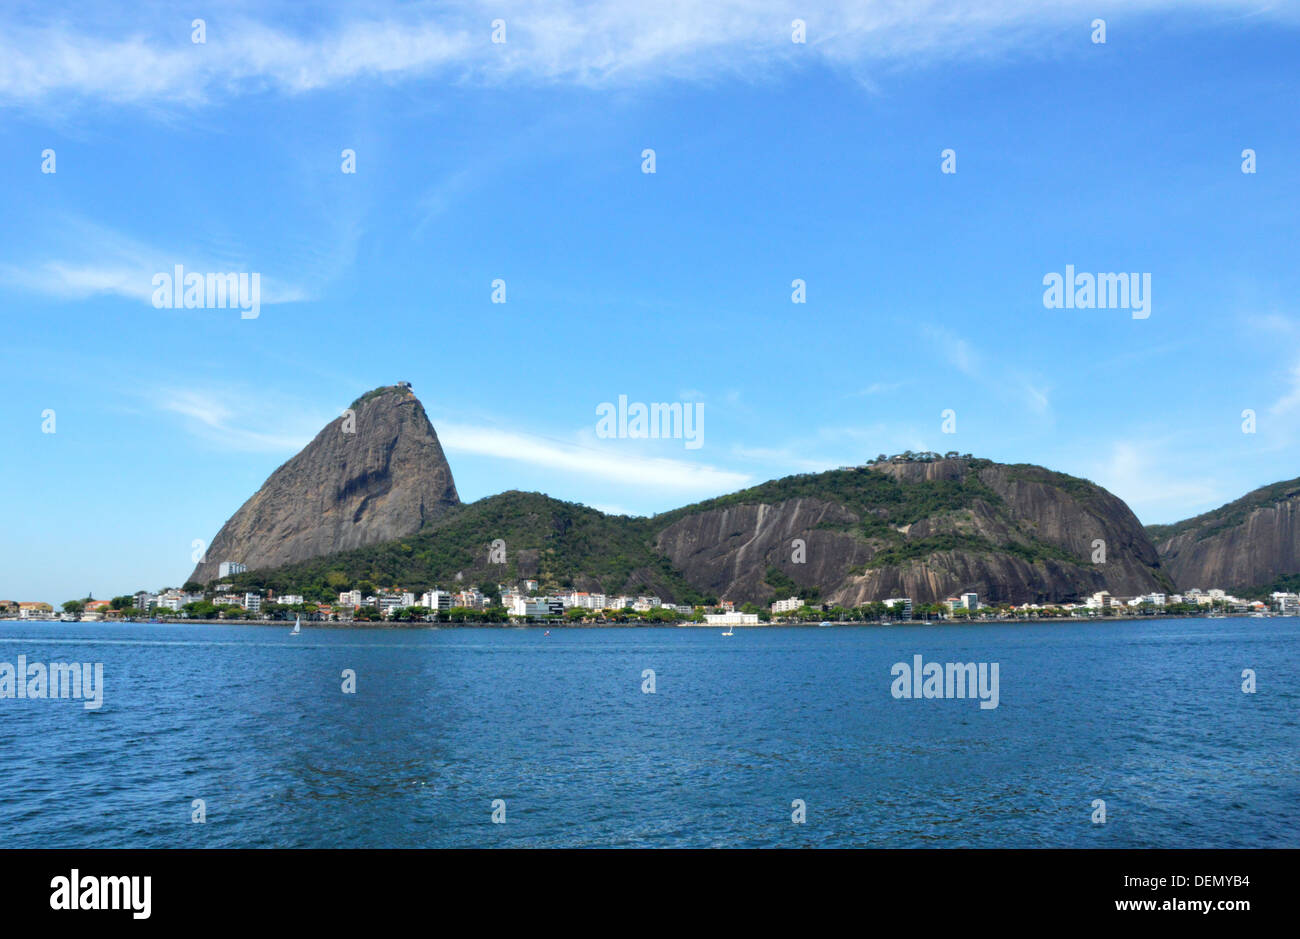 Rio de Janeiro Flamengo park sugar loaf, clear weather blue skies  guanabara bay Brazil Stock Photo